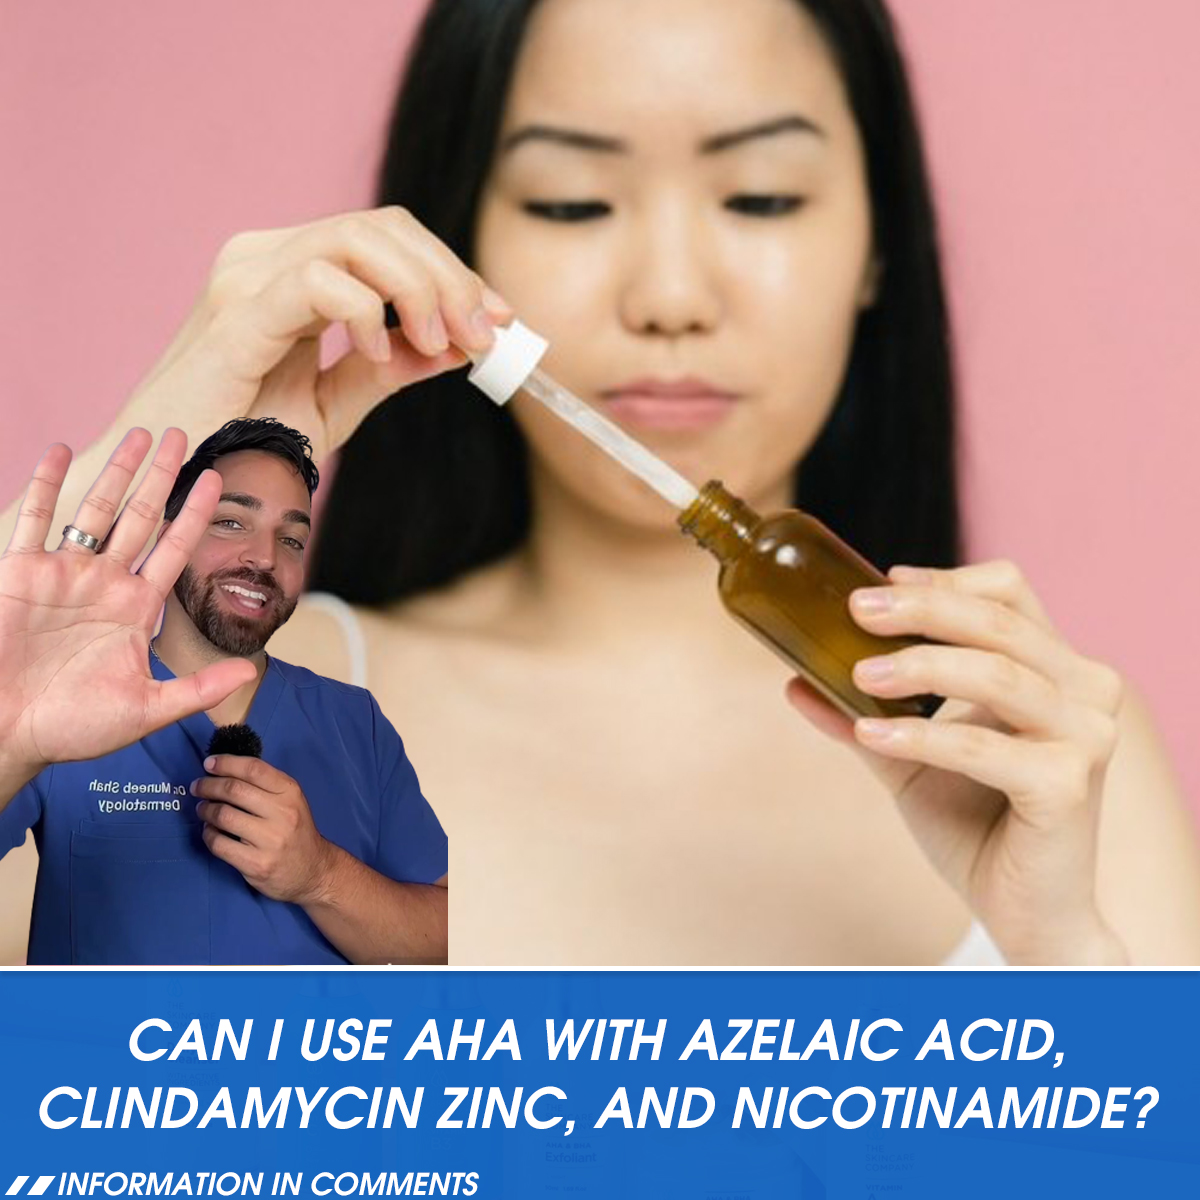 Can I use AHA with azelaic acid, clindamycin zinc, and nicotinamide?